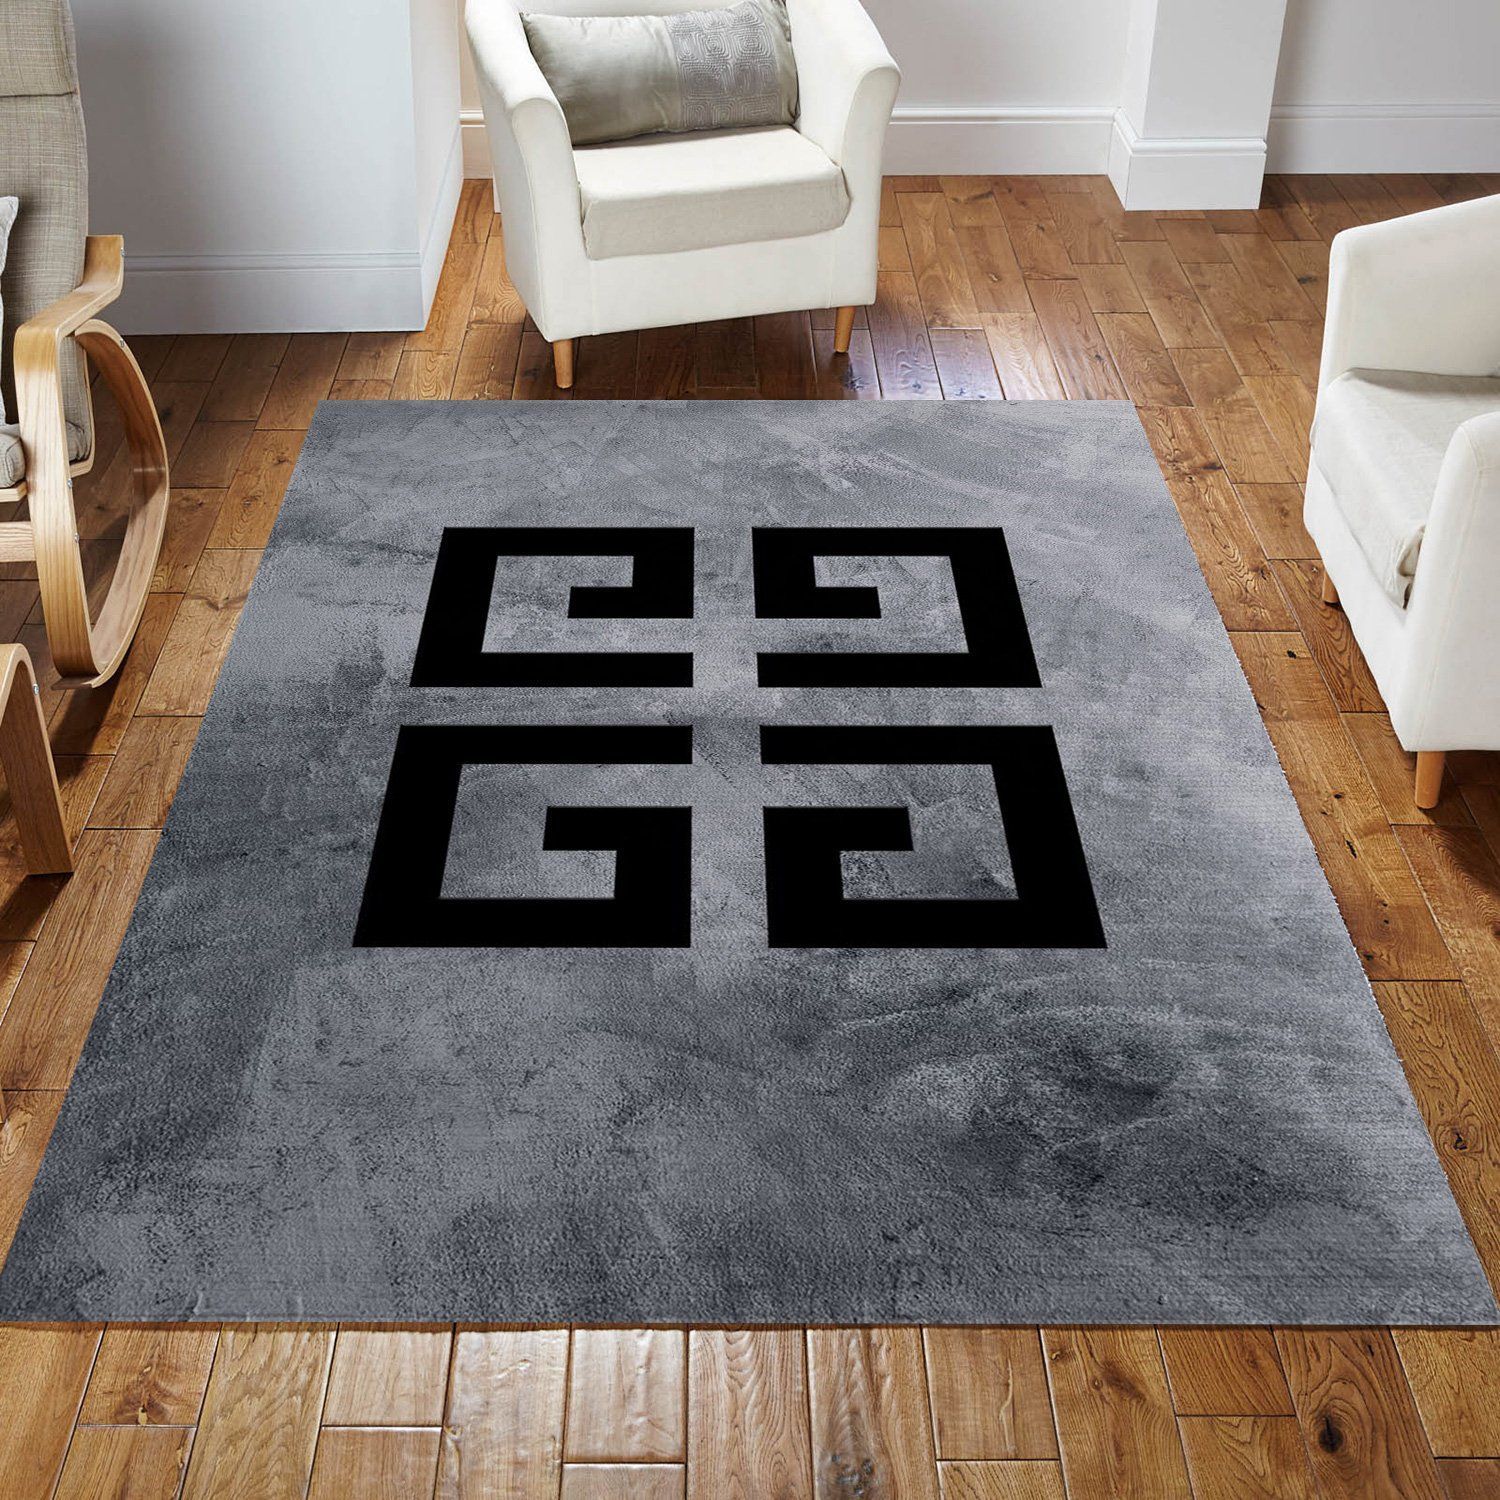 Givenchy Rug Fashion Brand Rug Home Decor Floor Decor - Indoor Outdoor Rugs 3